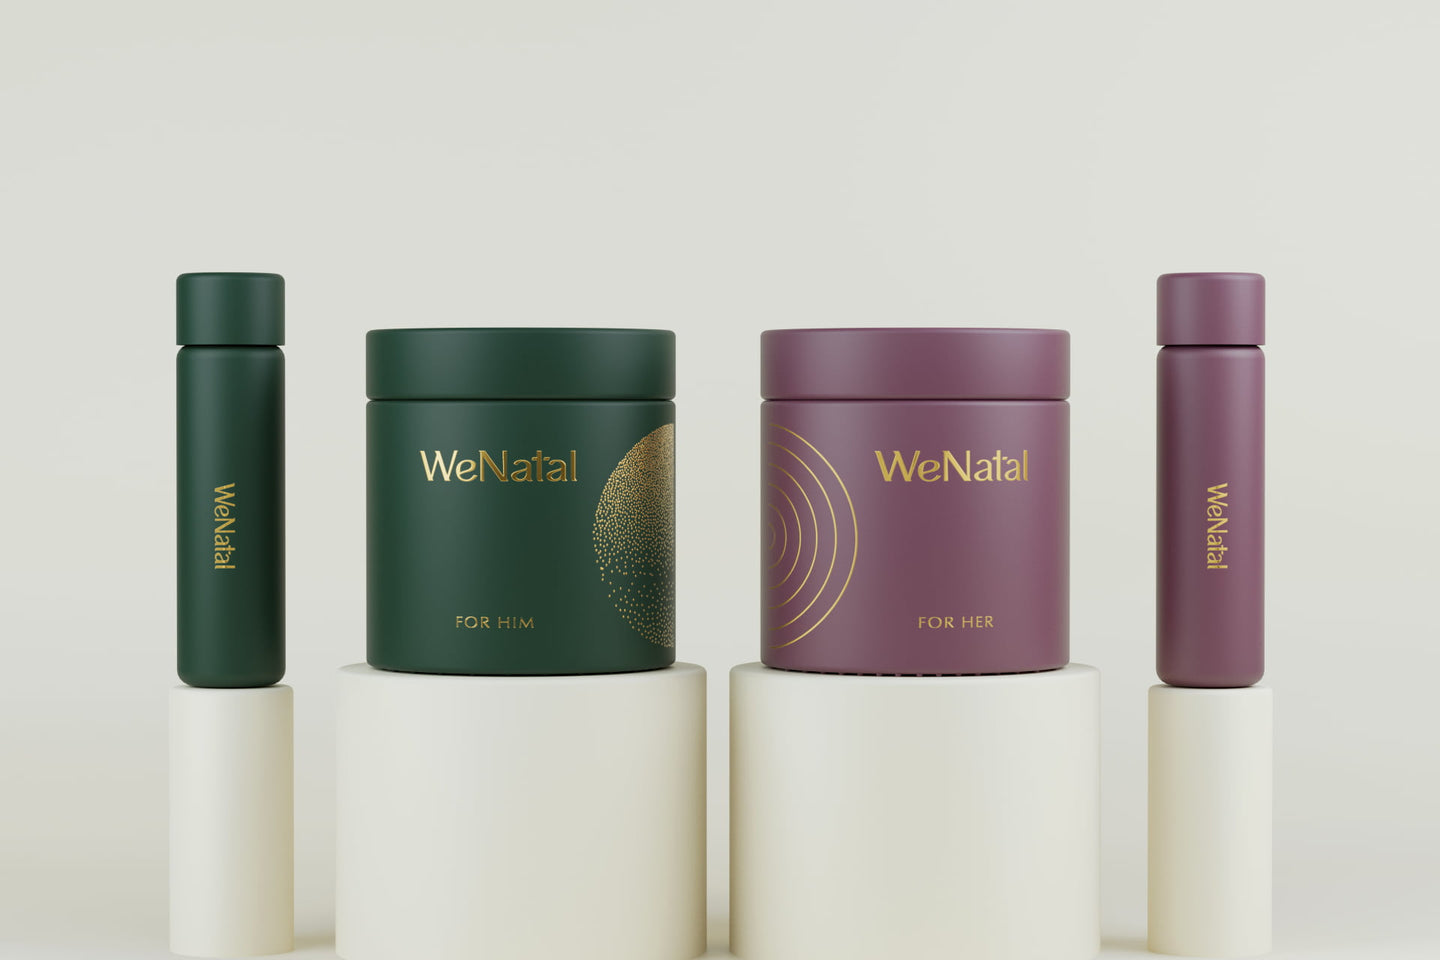 Prenatal supplements jar on an elevated round platform. Left to Right: WeNatal For Him travel vial, WeNatal For Him glass jar, WeNatal For Her glass jar, WeNatal For Her travel vial